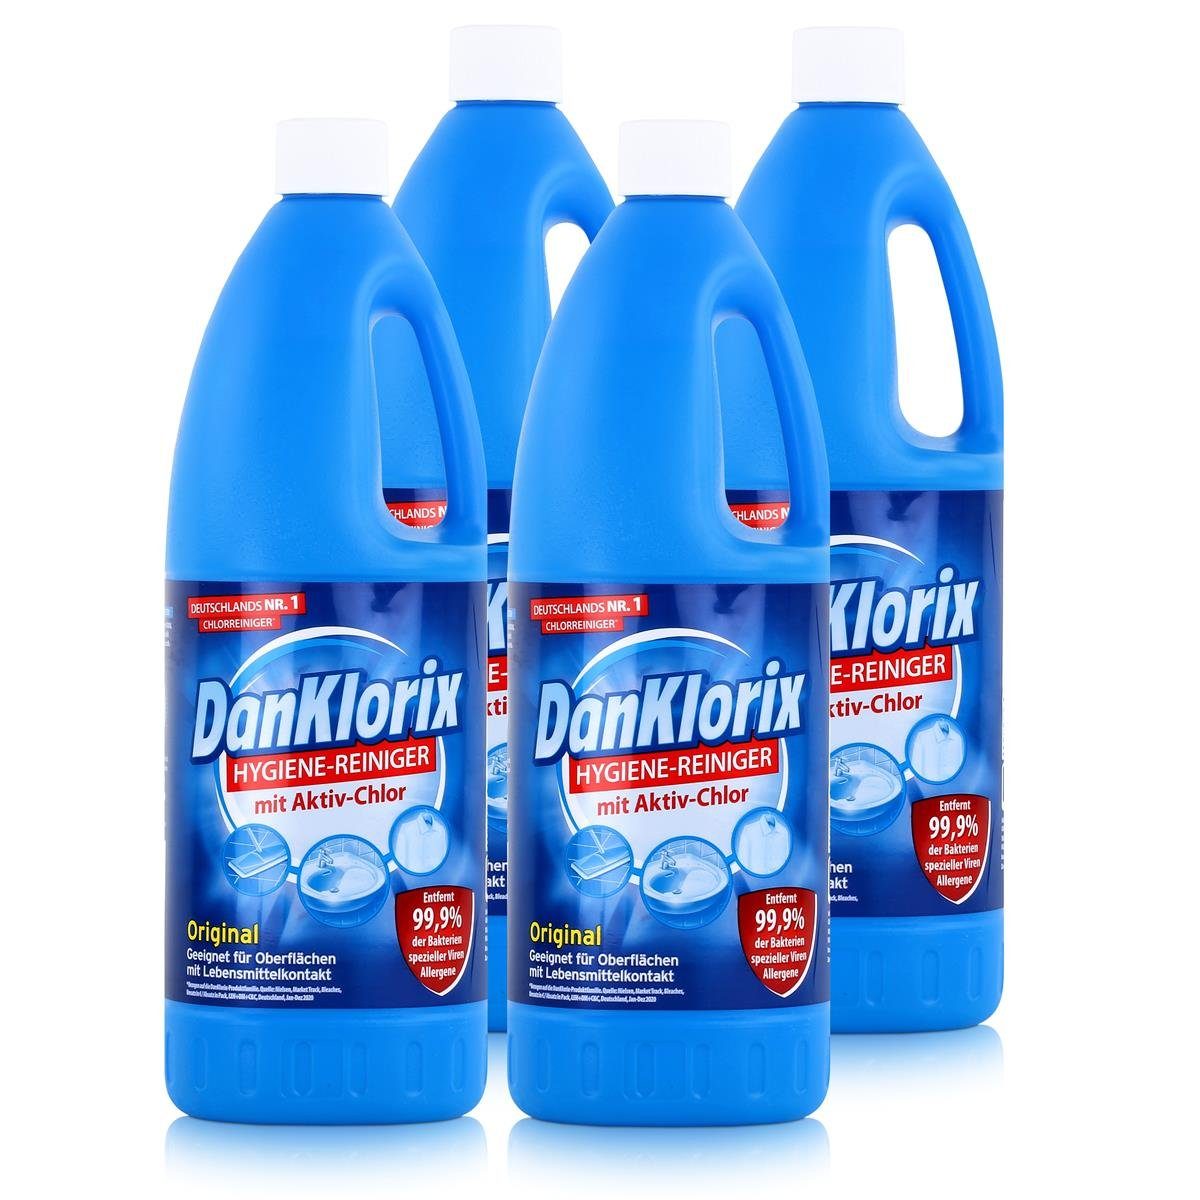 DanKlorix DanKlorix Hygiene-Reiniger 1,5L Allzweckreiniger (4er Aktiv-Chlor Pack) - Mit